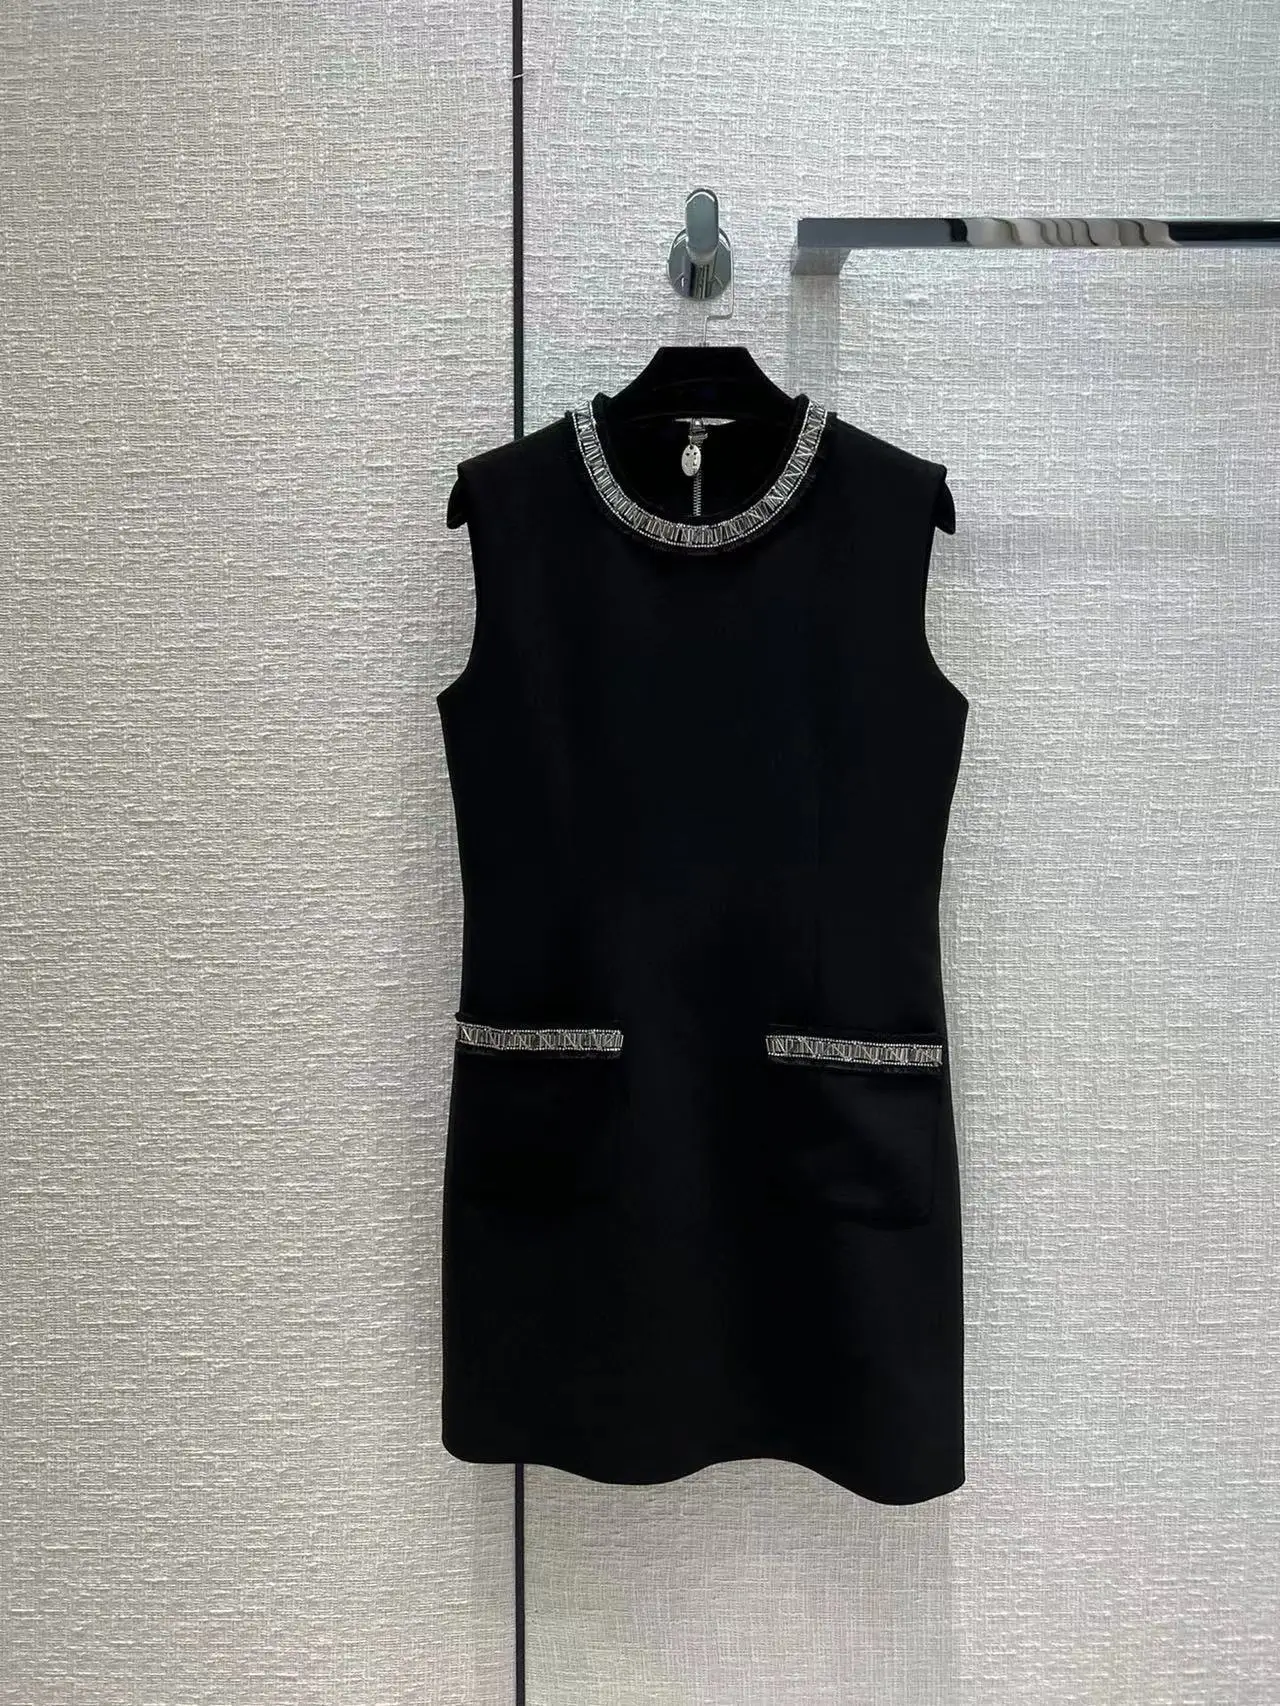 Fyion Fashion Luxury Dress 2022 Summer Spring New Design Women Runway Solid Black High Quality Beading Sleeveless Mini Dress